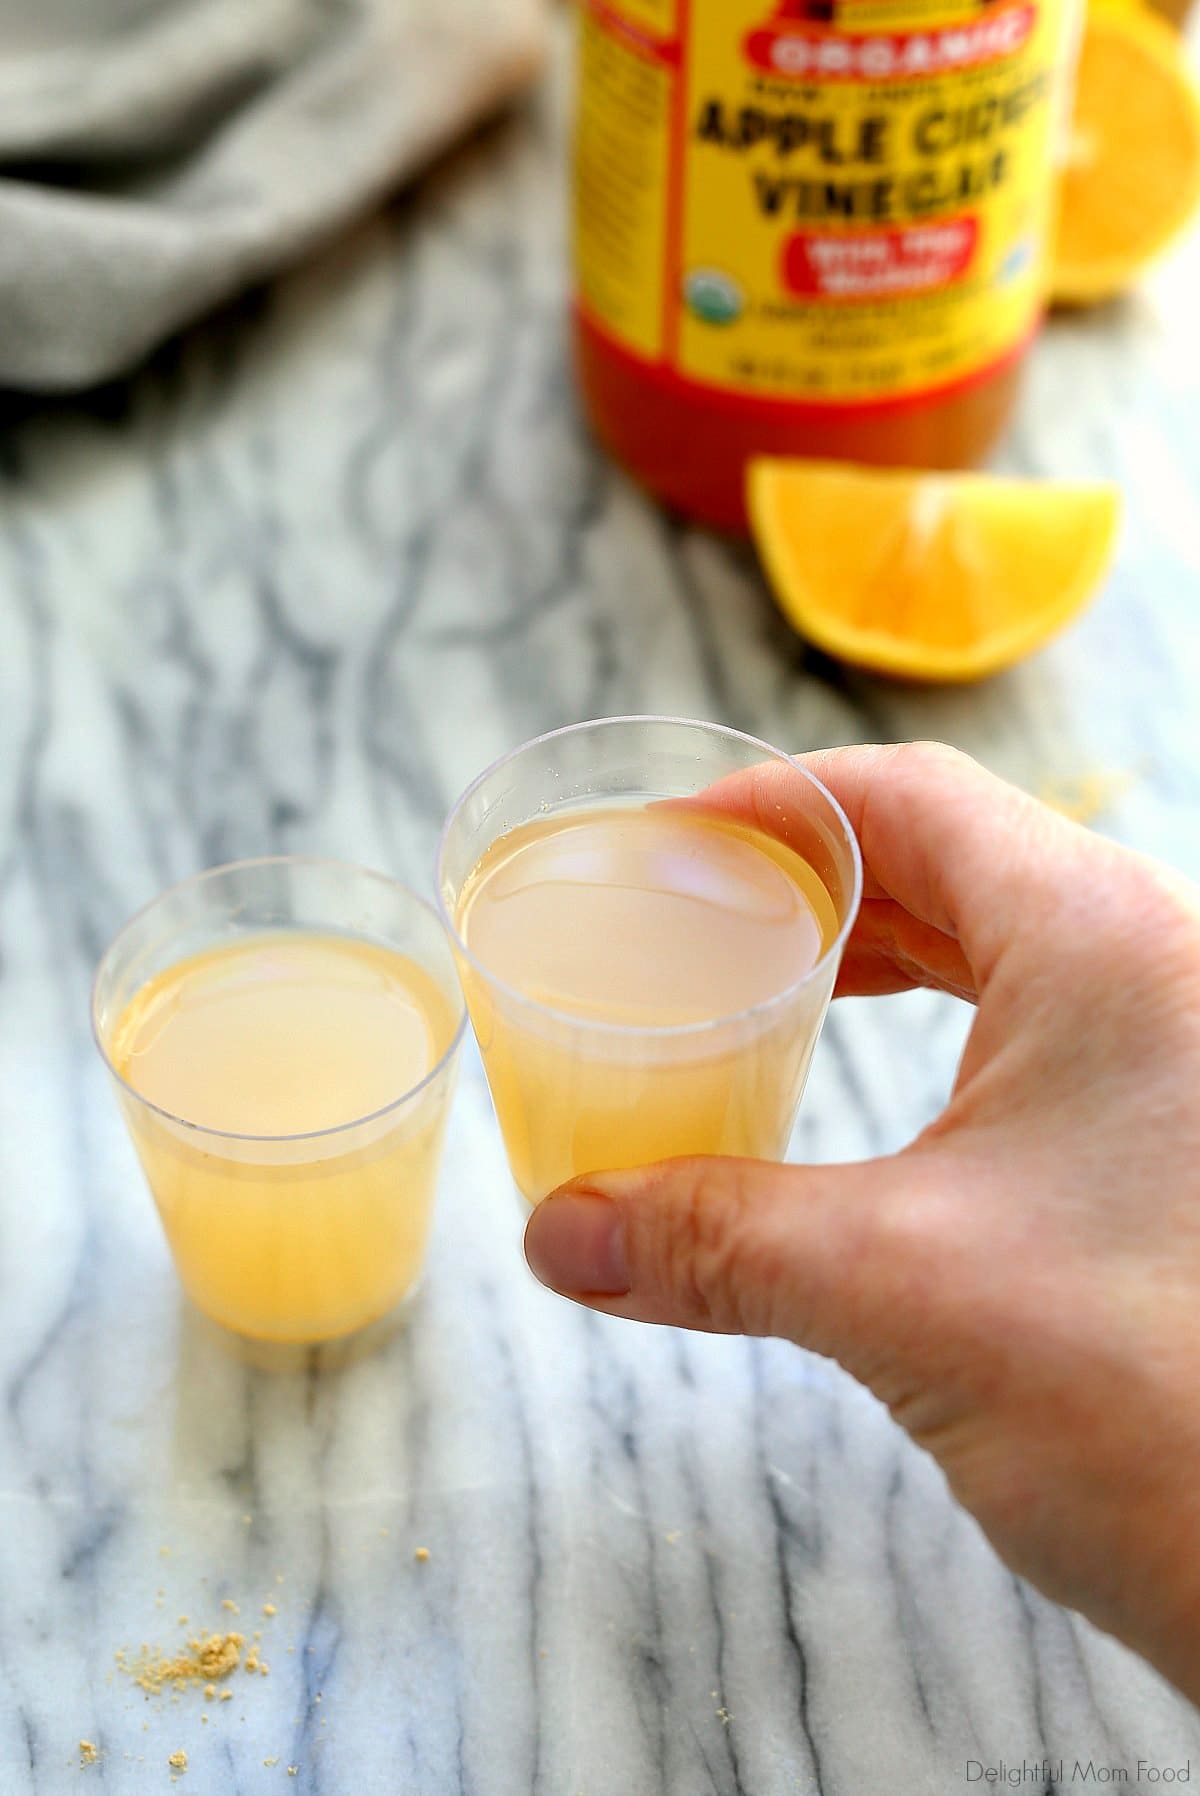 Apple Cider Vinegar Shots (ACV Shots)